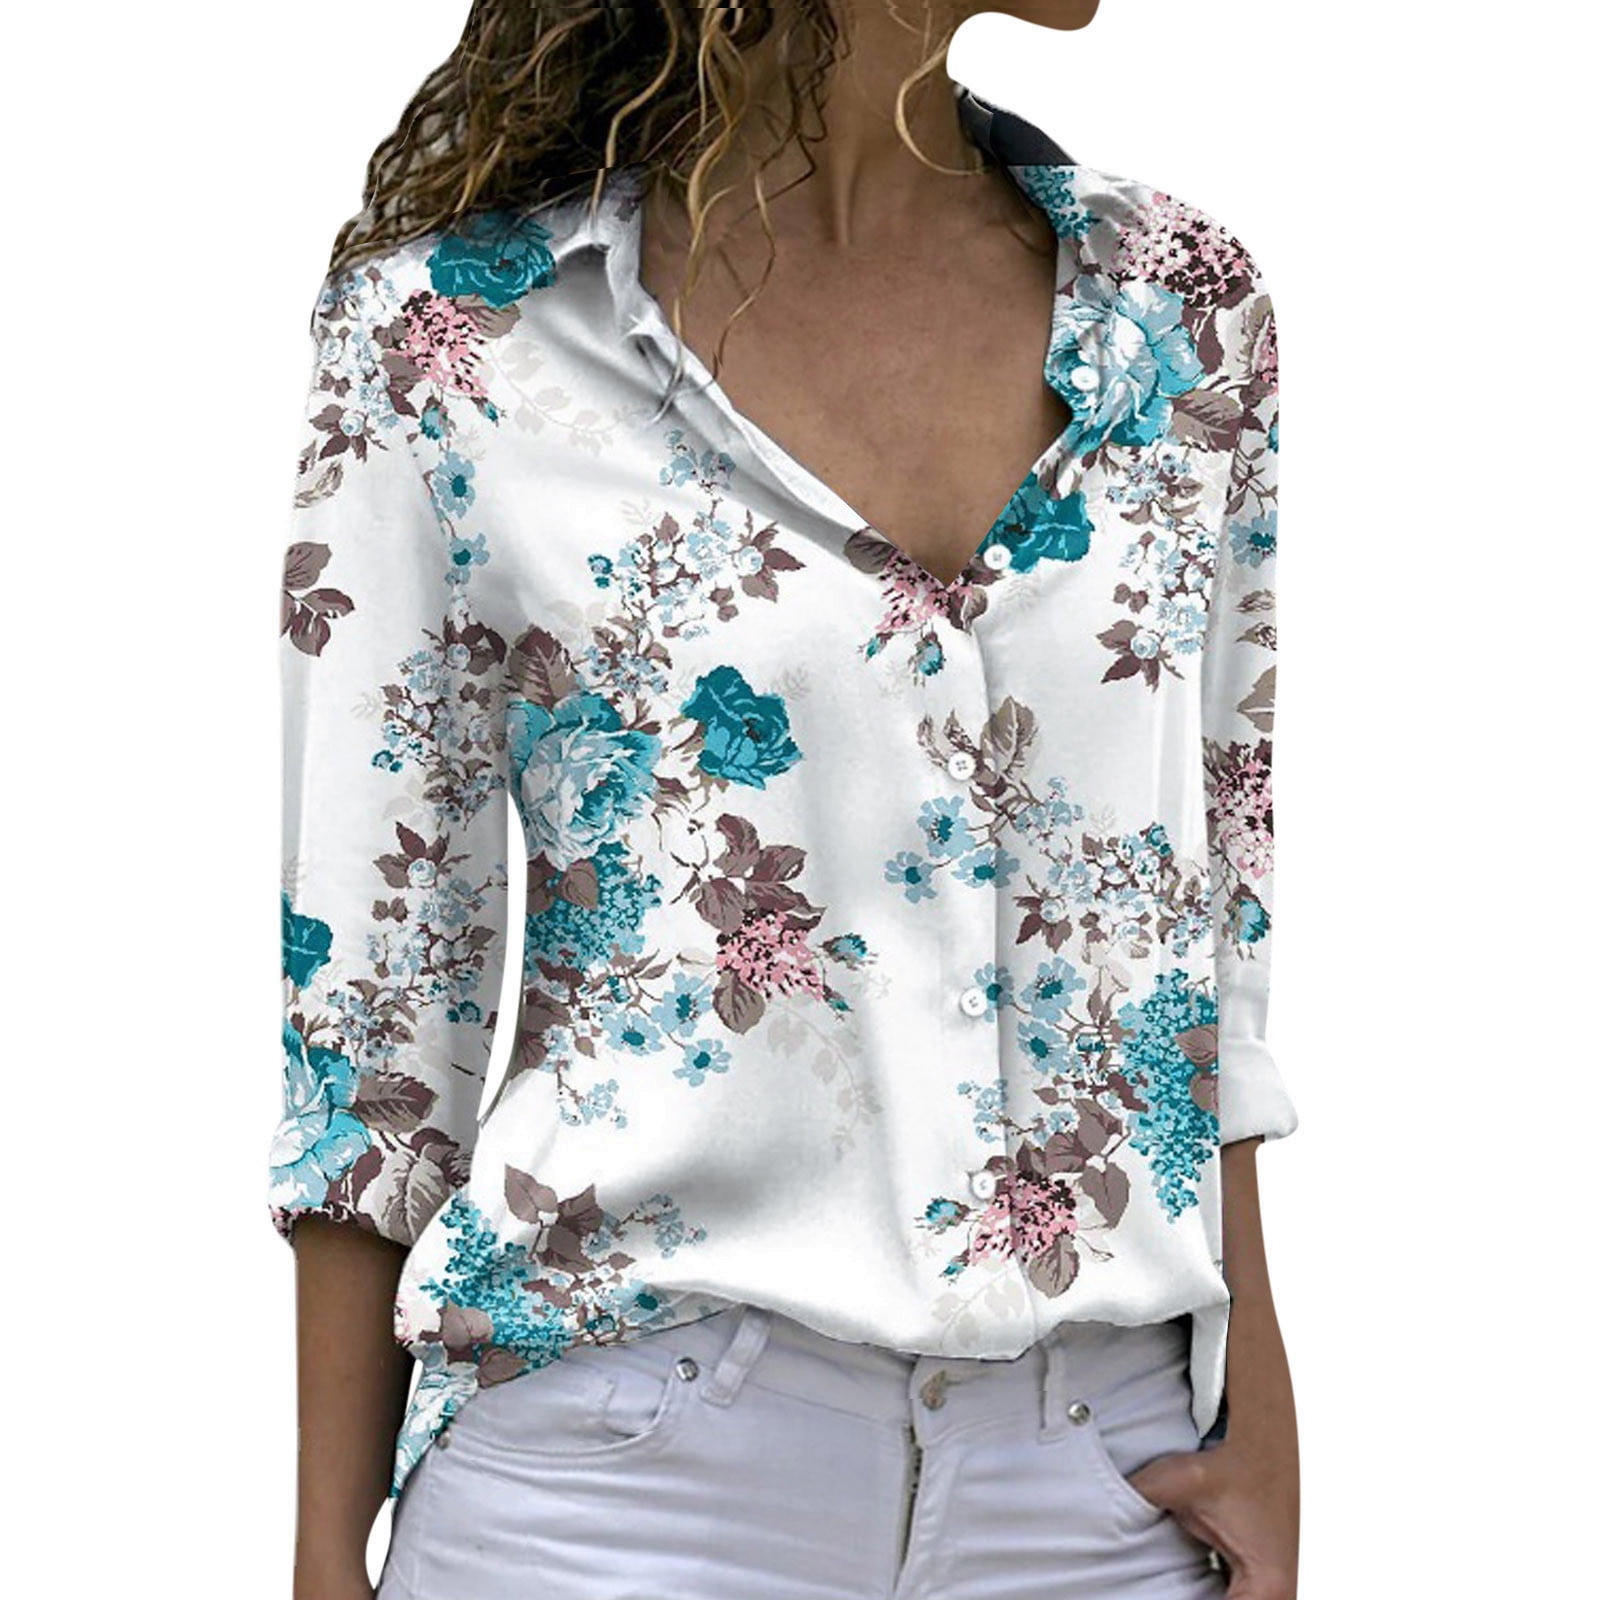 ZMHEGW Women's Floral Printed Shirts Tops Long Sleeve Lapel Button Down ...